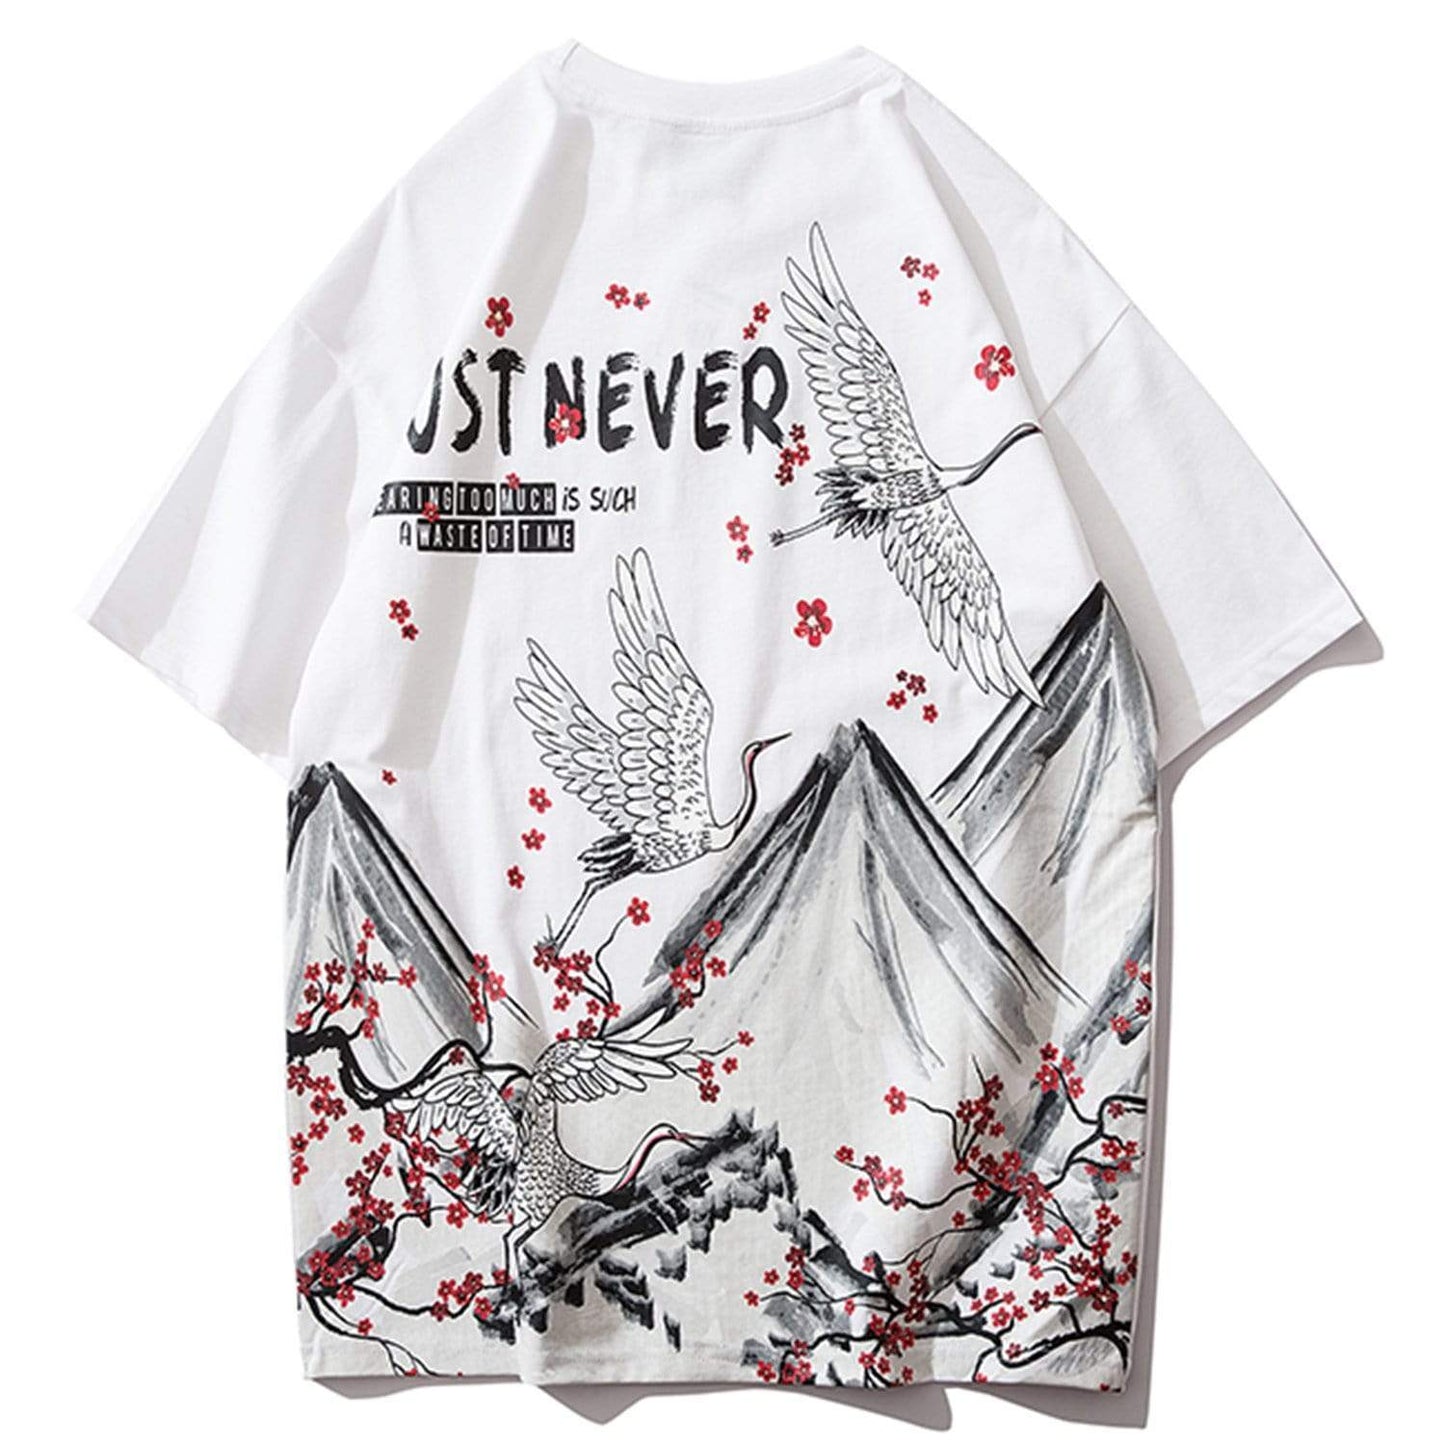 Just Never T-Shirt